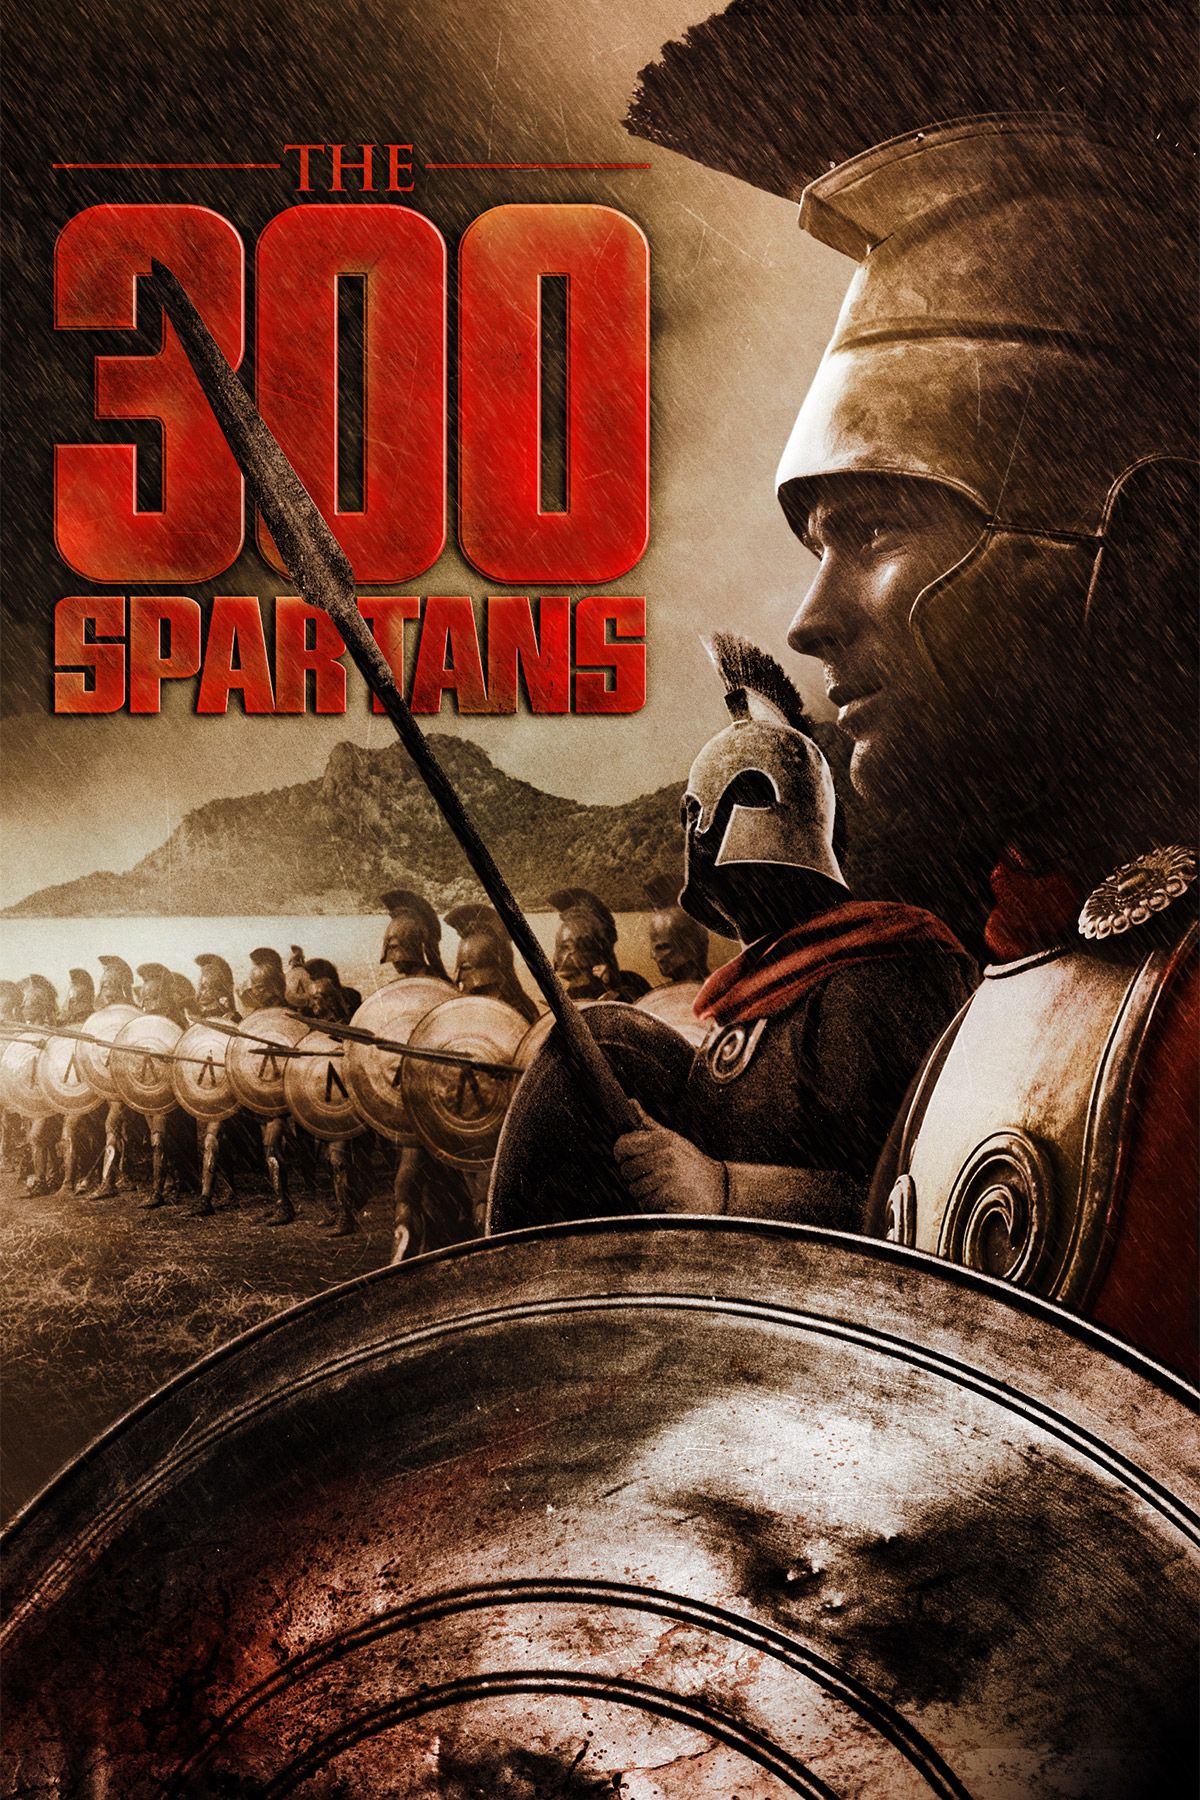 300 spartans movie